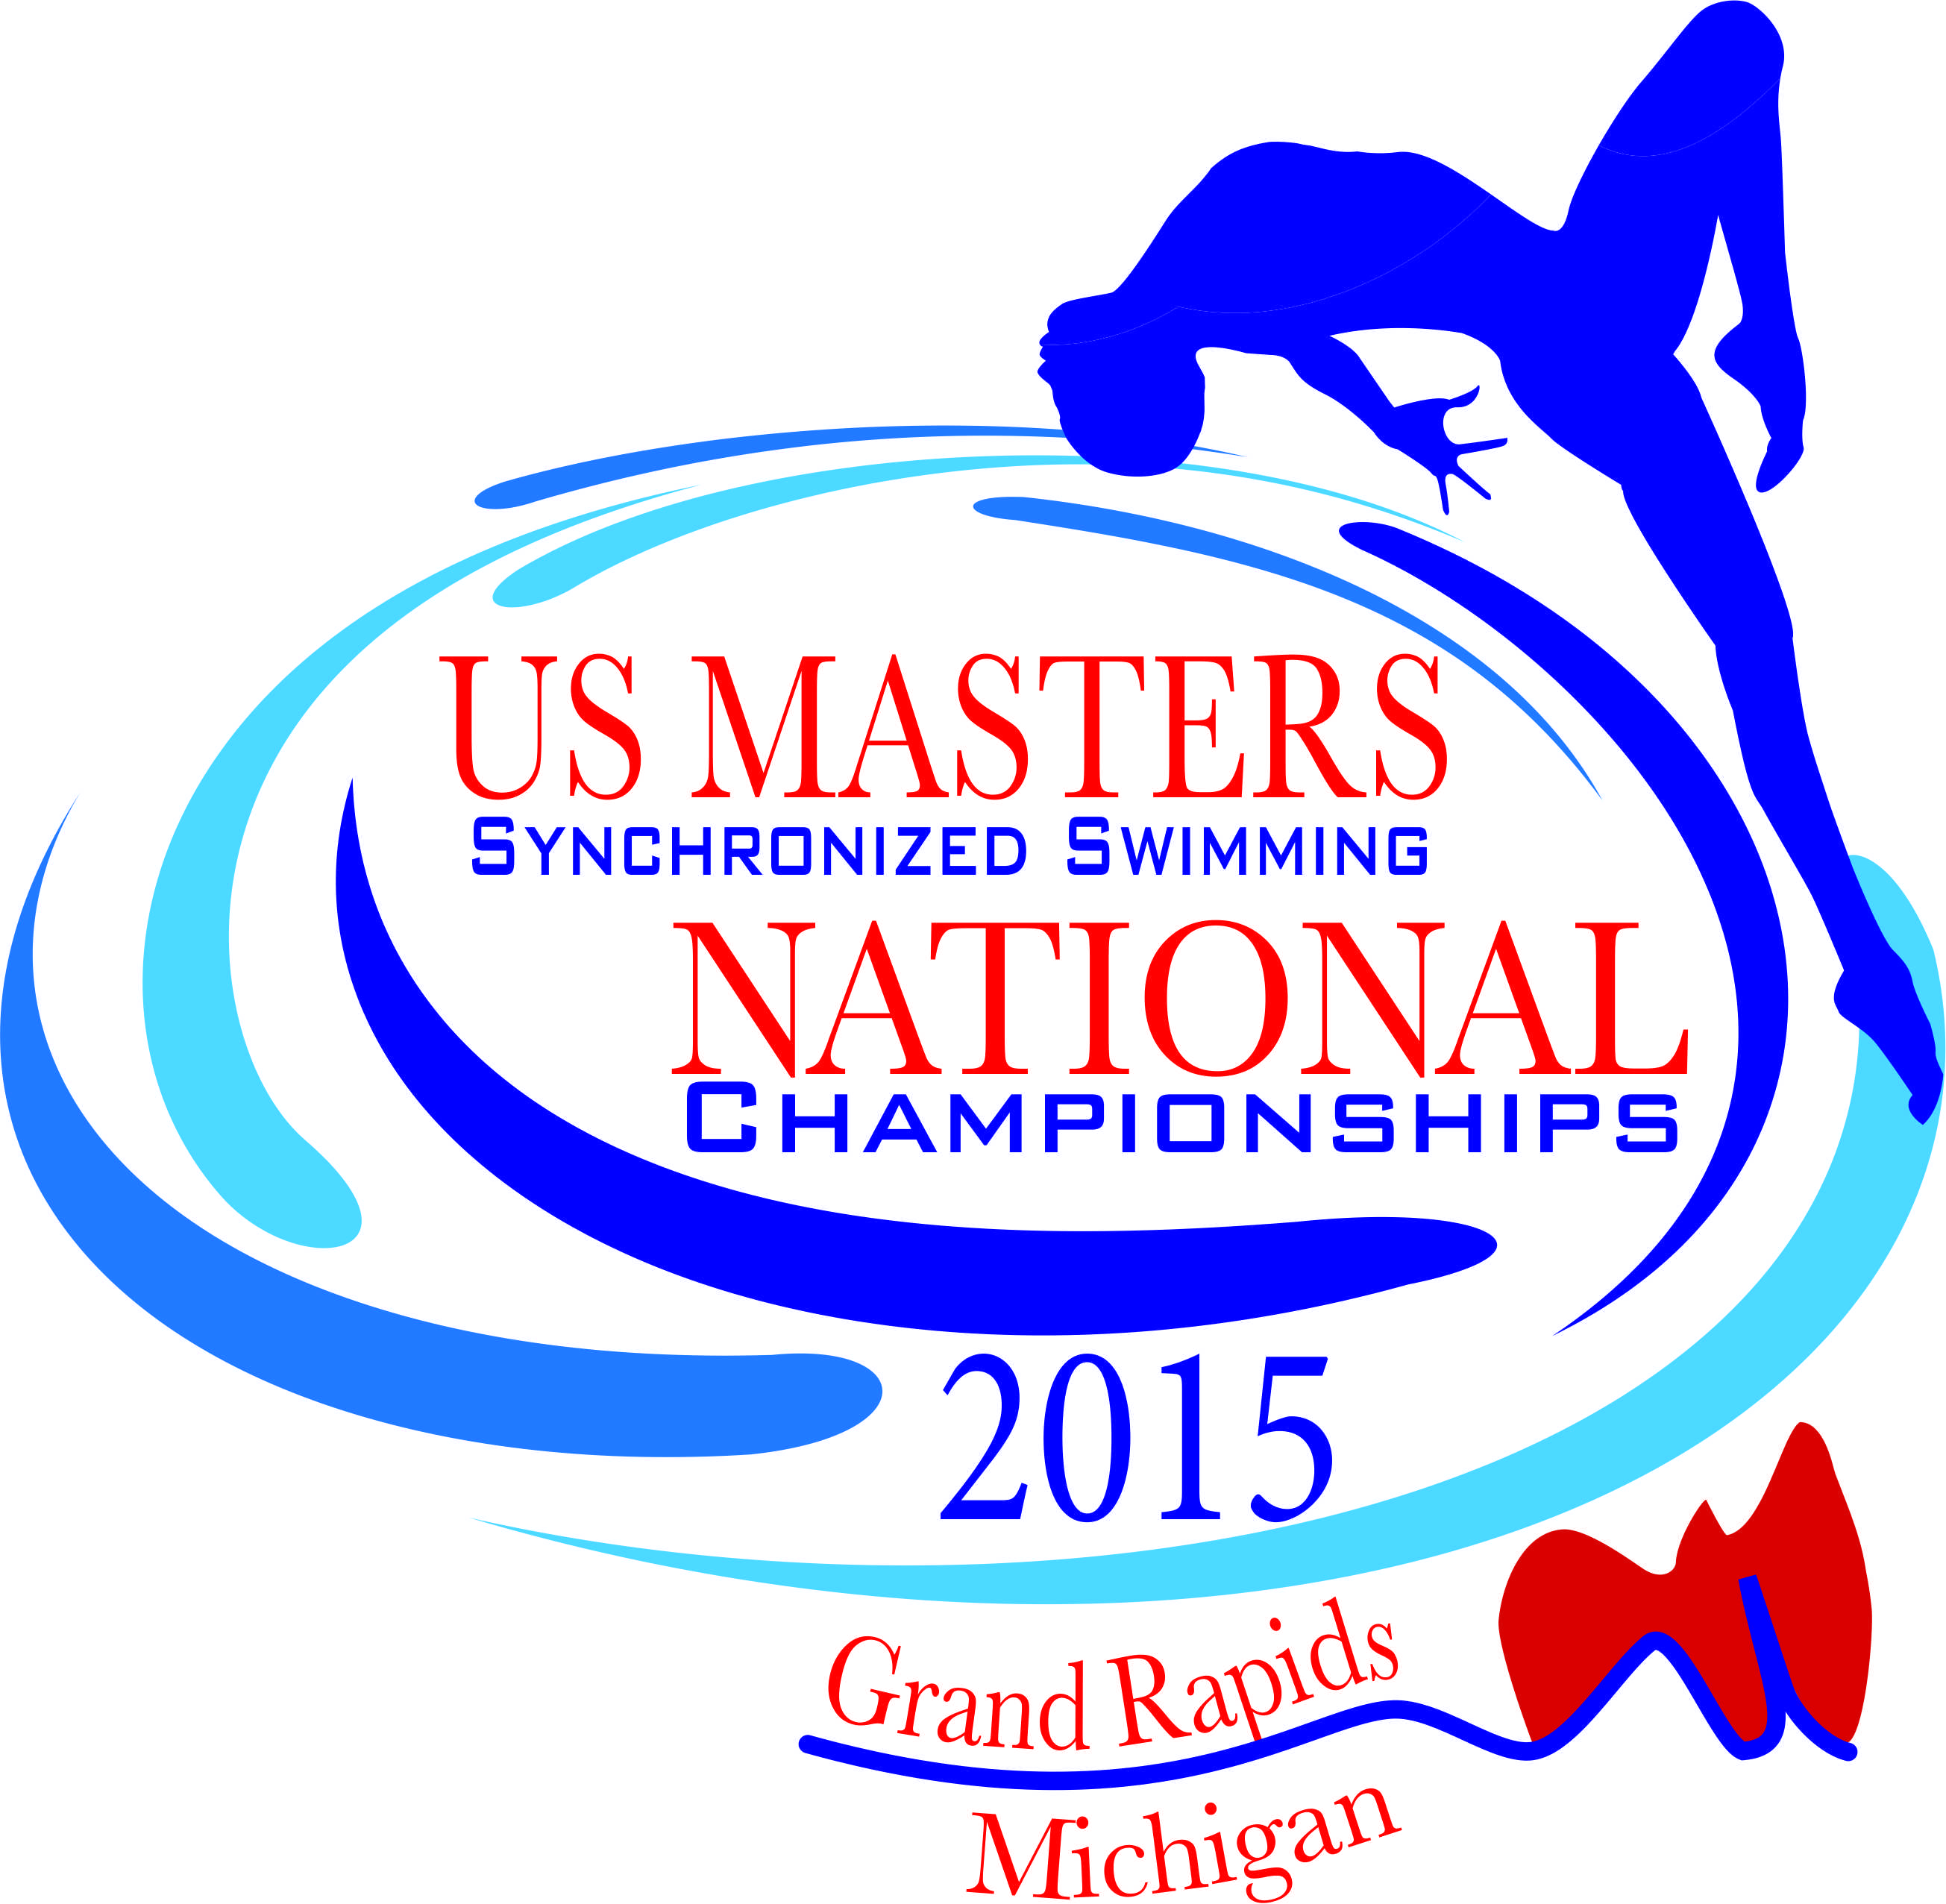 USA Synchro Masters National Championships